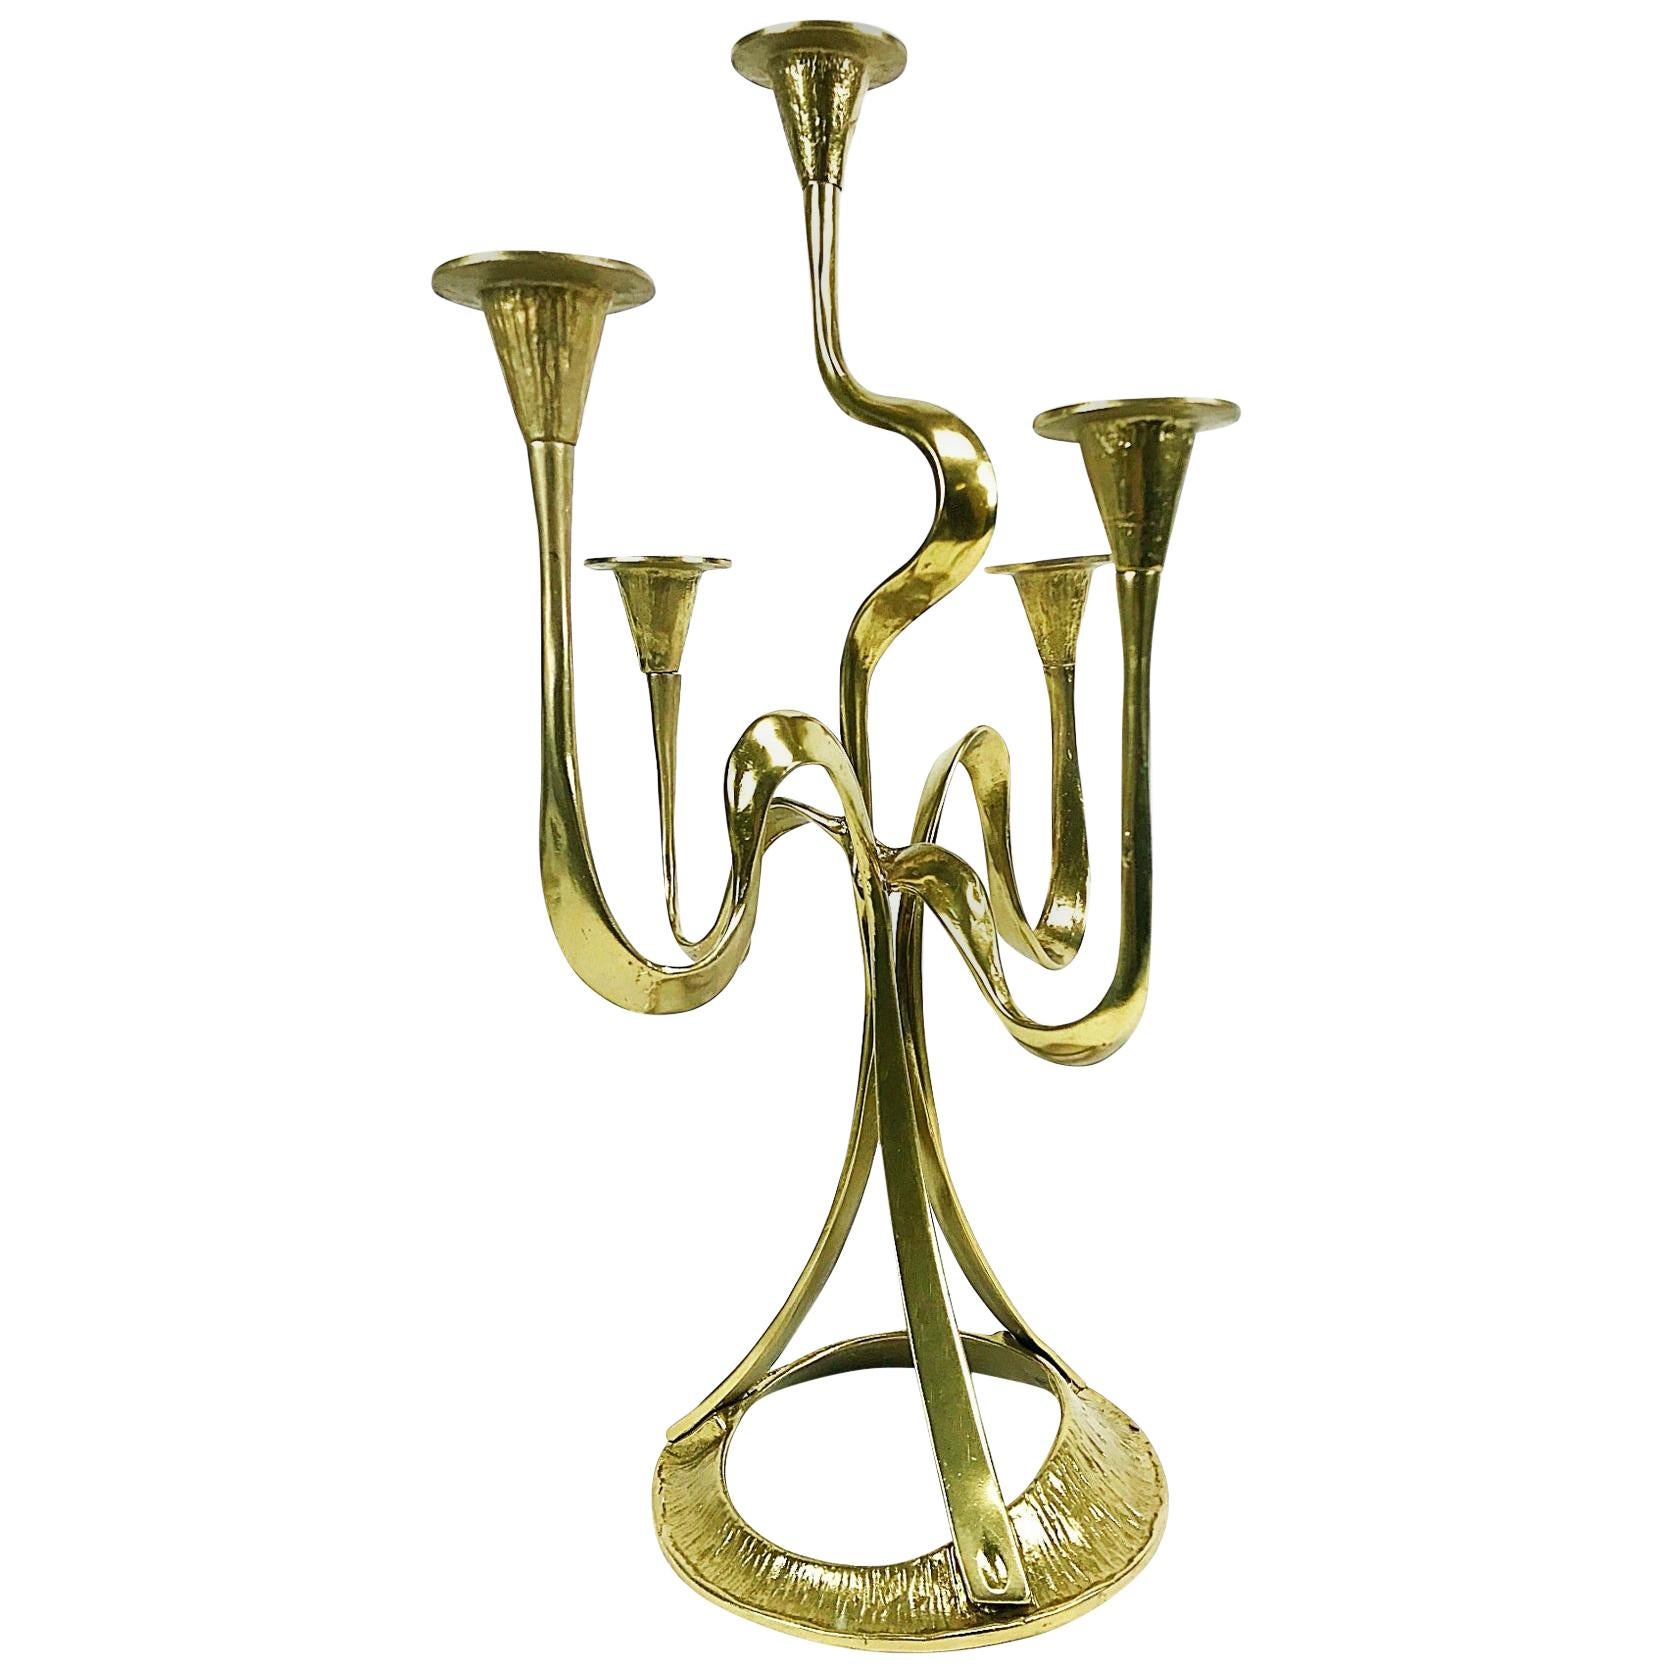 Midcentury Five-Arm Organic Form Brass Candleholder, Candelabra, 1960s, Austria